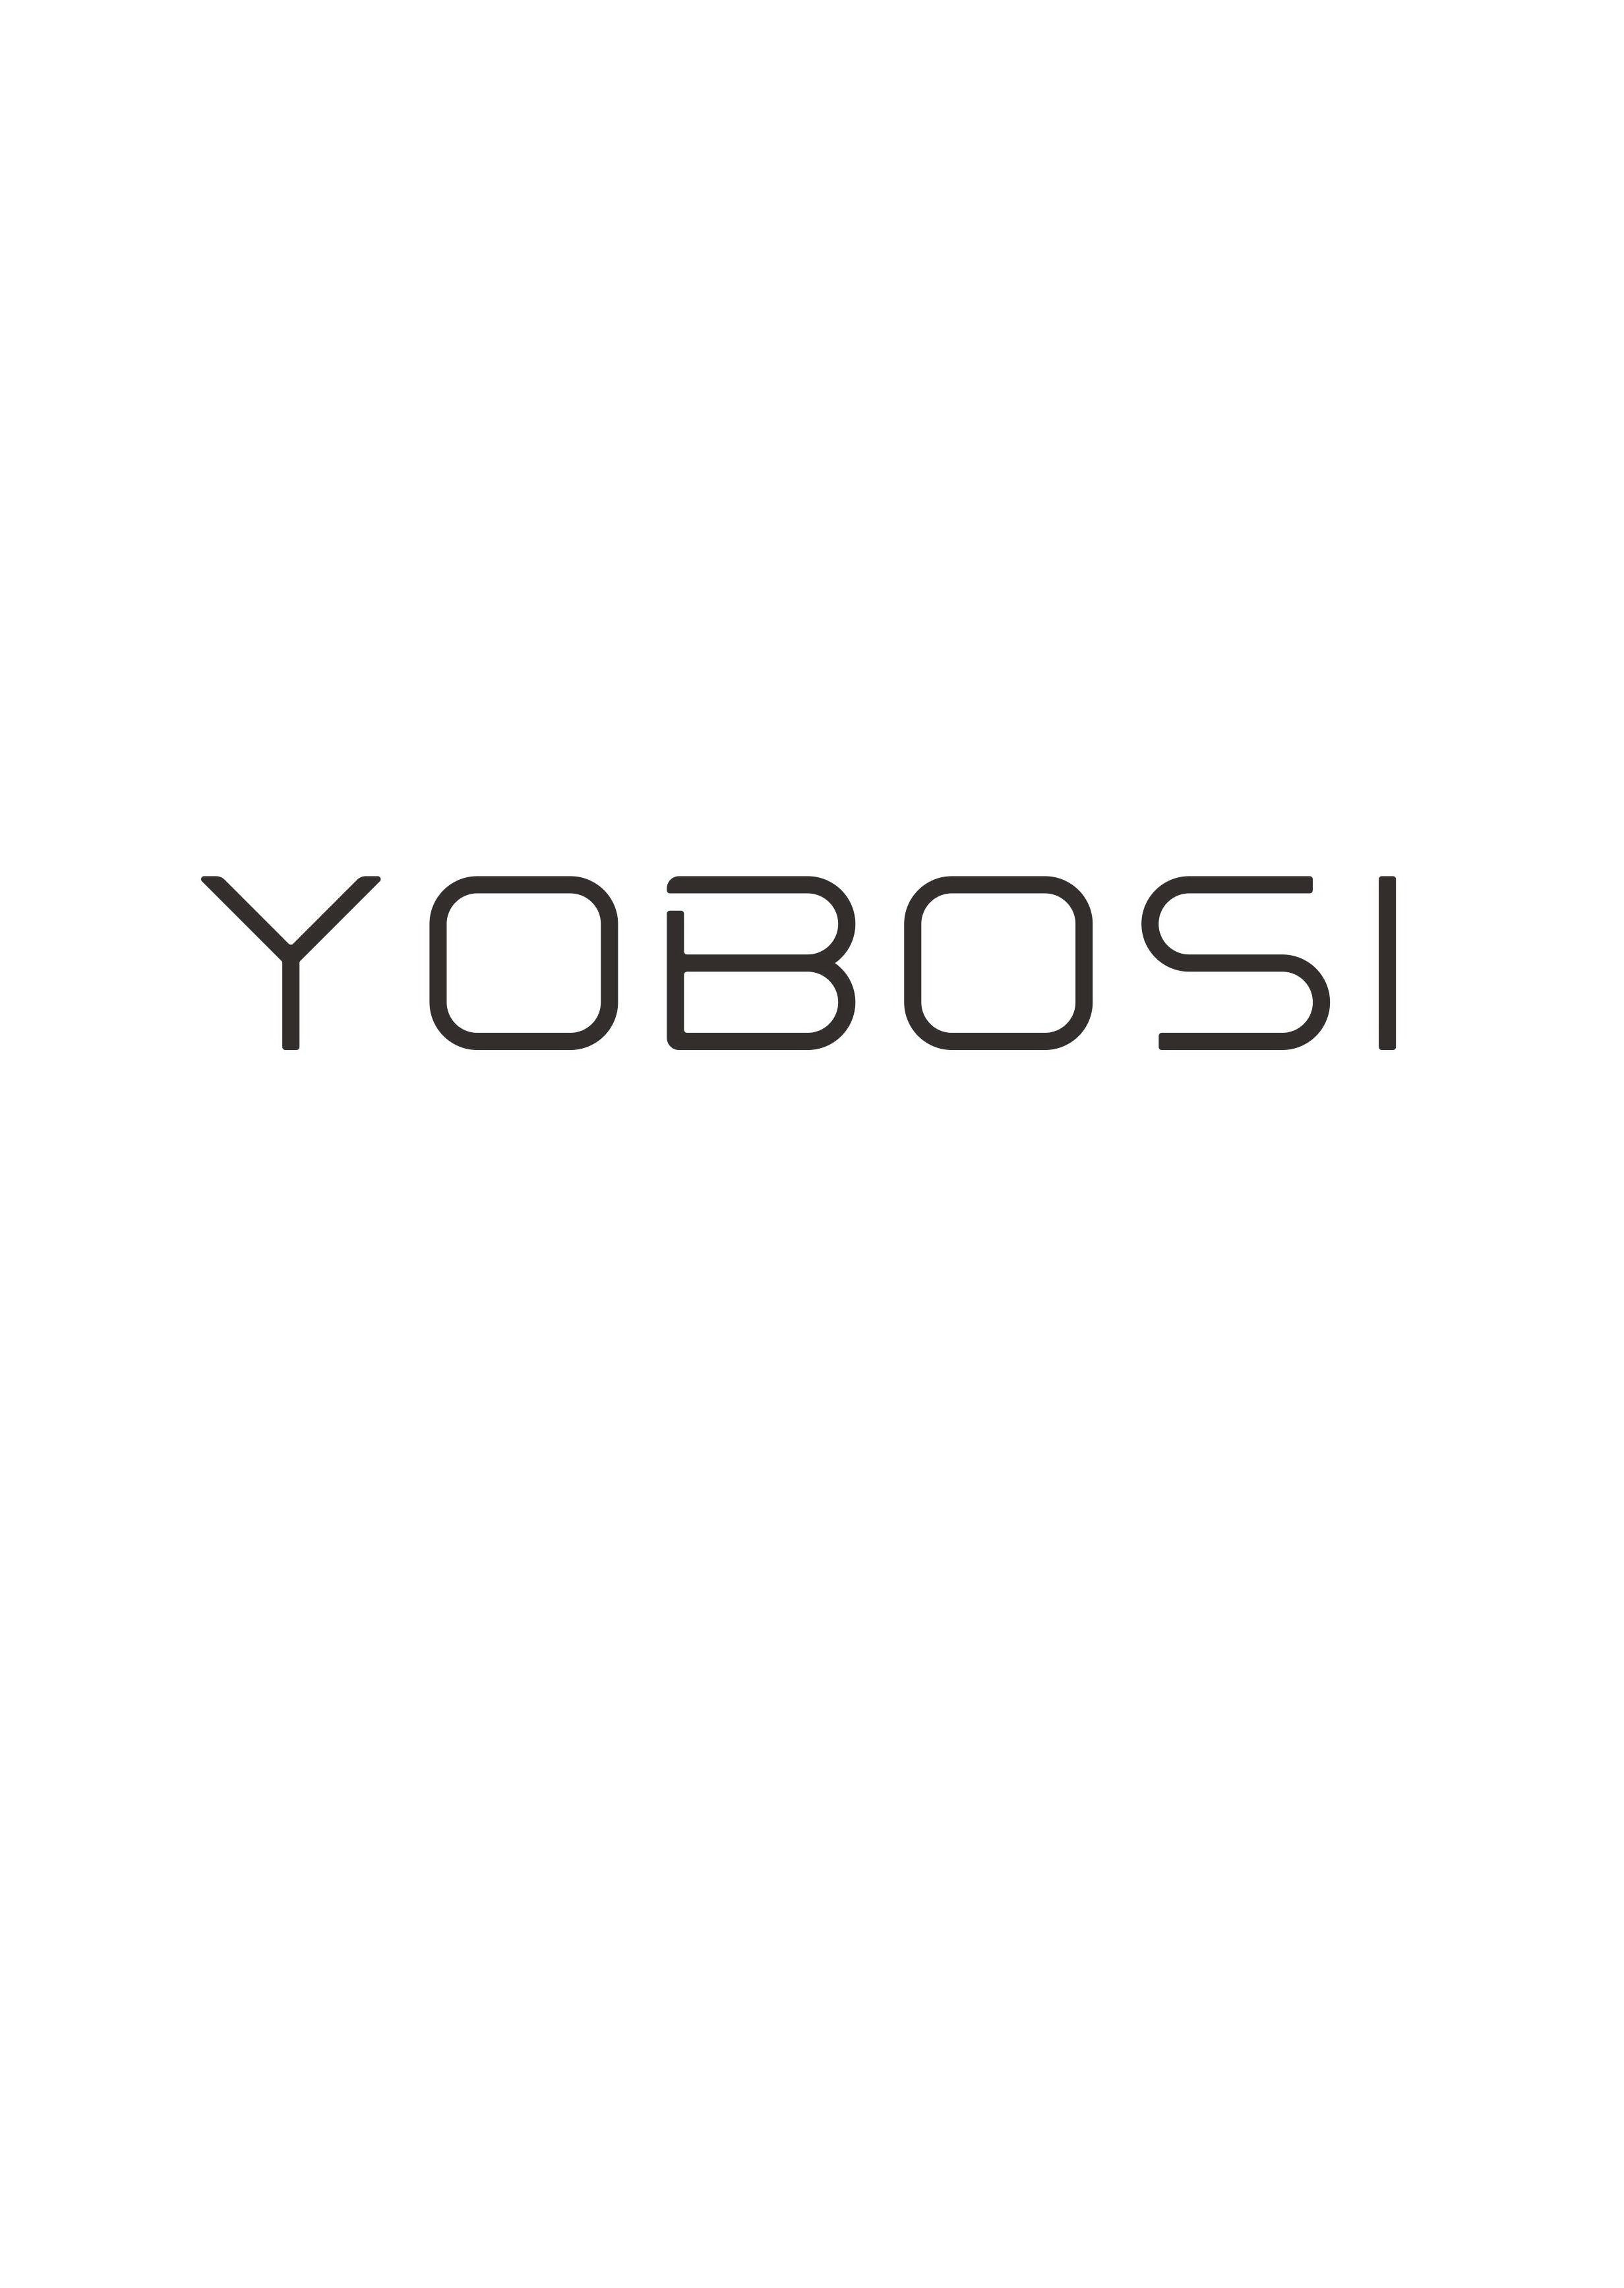  YOBOSI